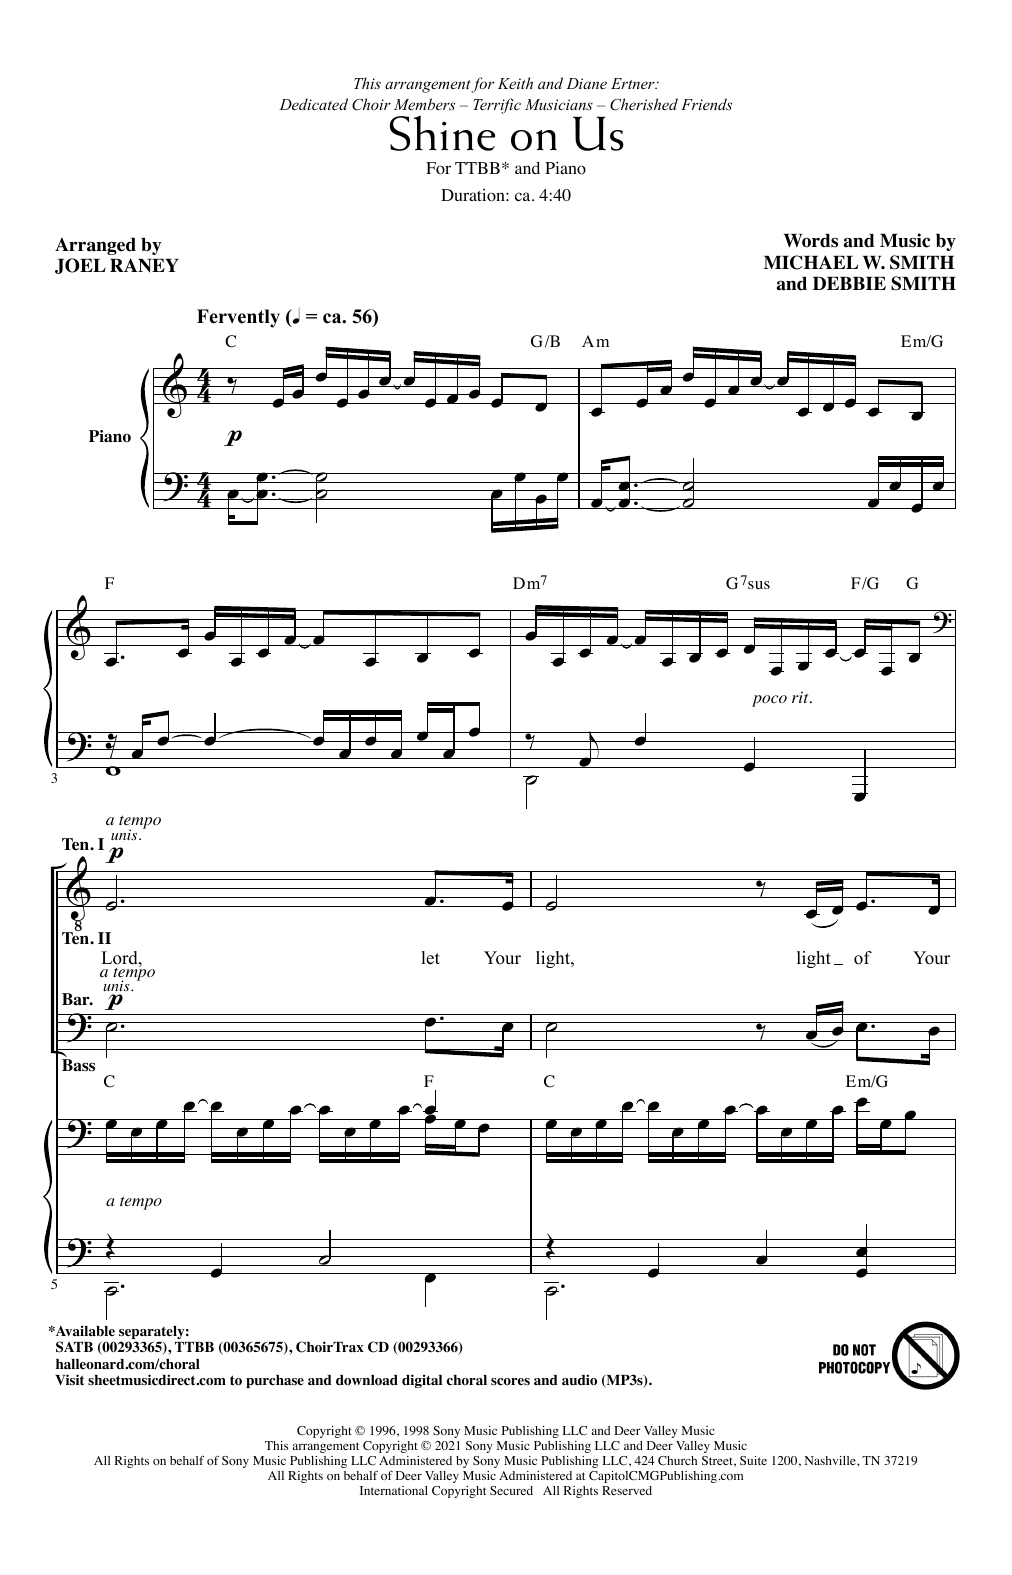 Phillips, Craig & Dean Shine On Us (arr. Joel Raney) Sheet Music Notes & Chords for TTBB Choir - Download or Print PDF